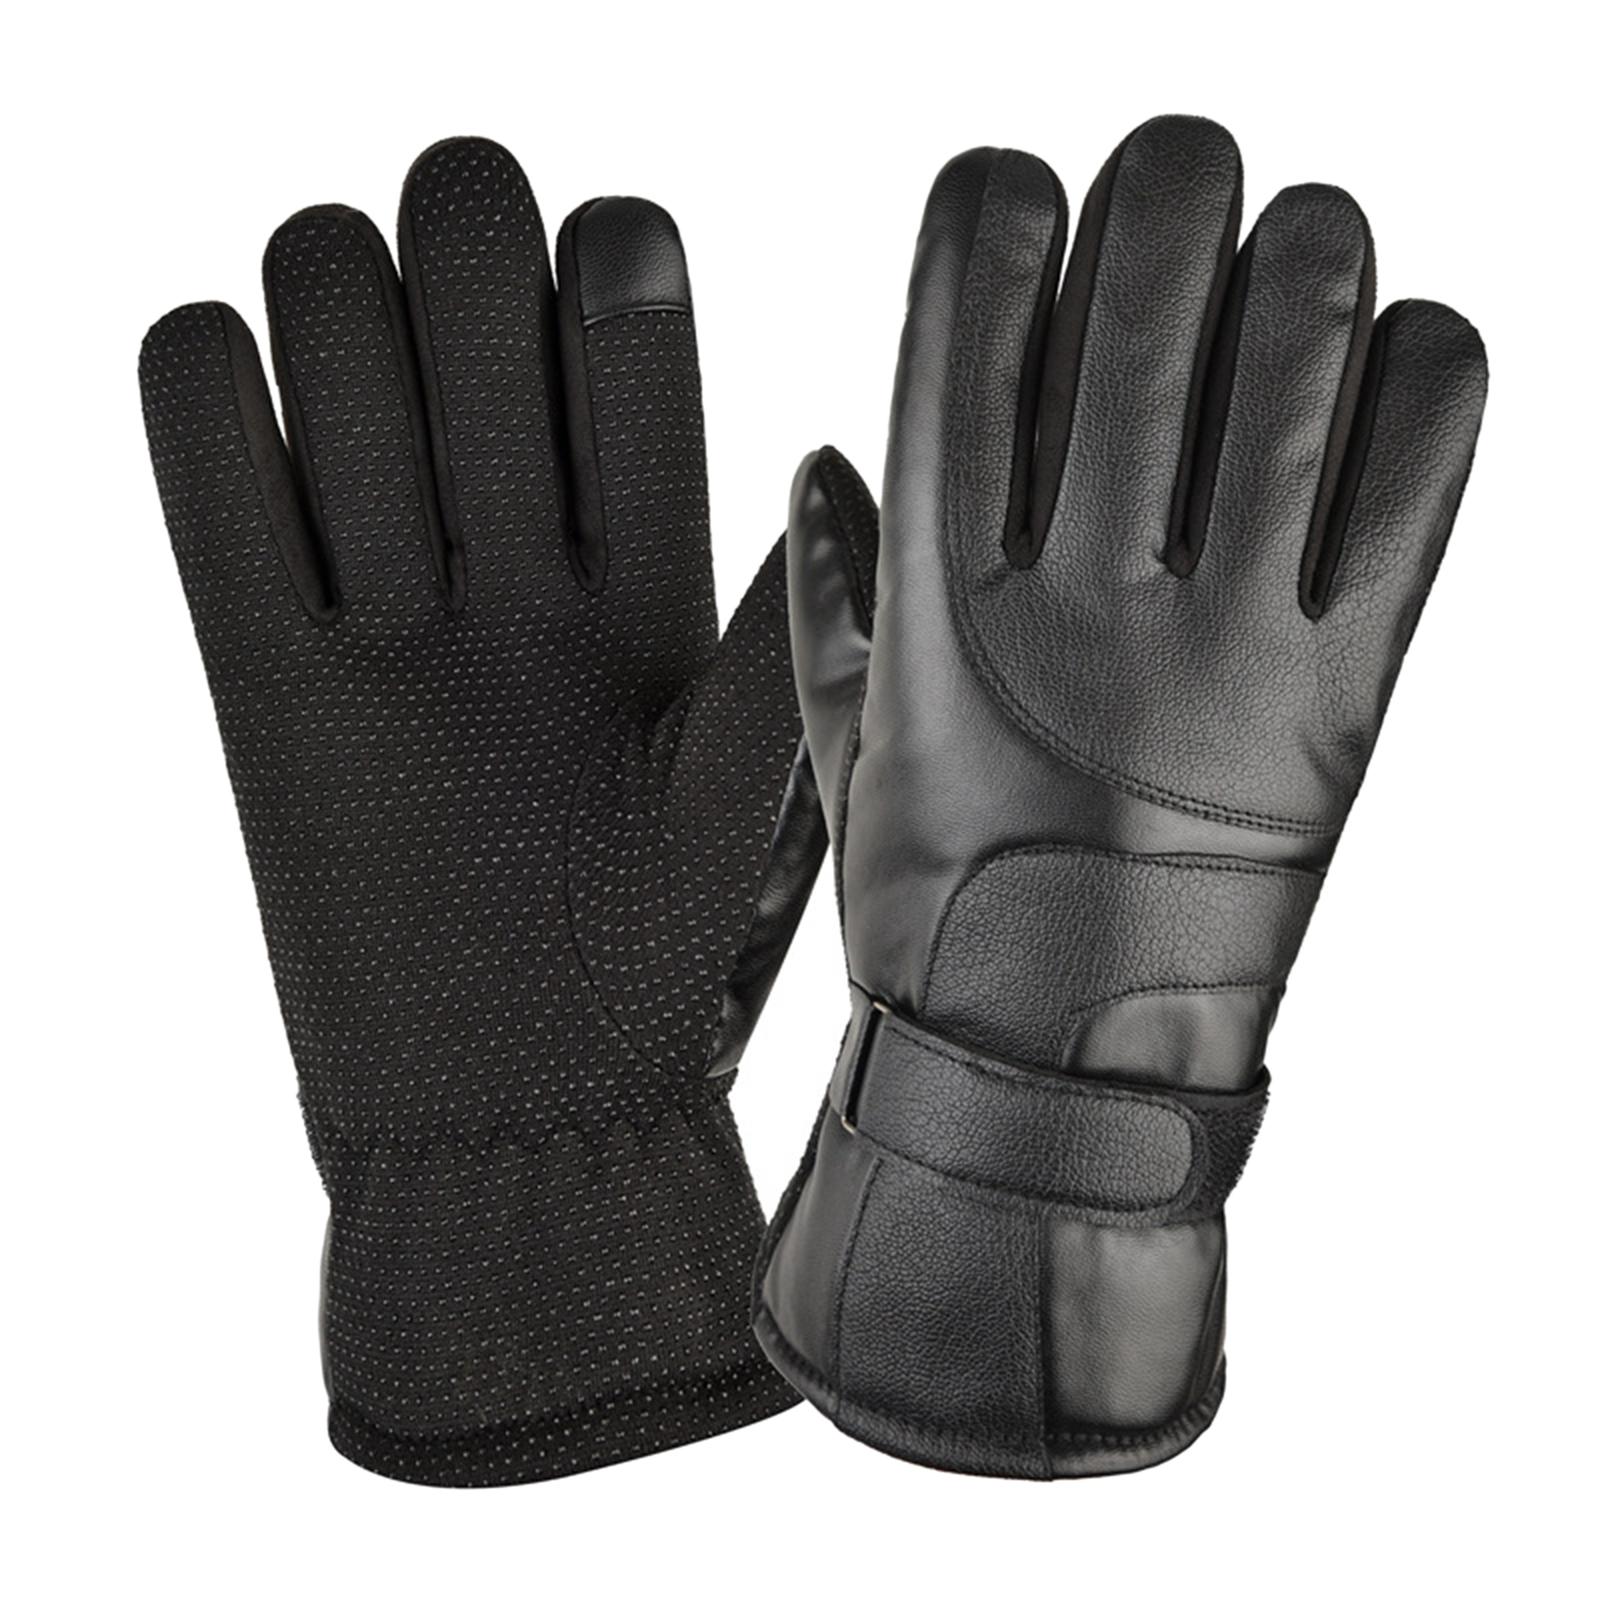 Winter Touchscreen Gloves Mittens Work Sports Walking Nonslip Fishing Hiking